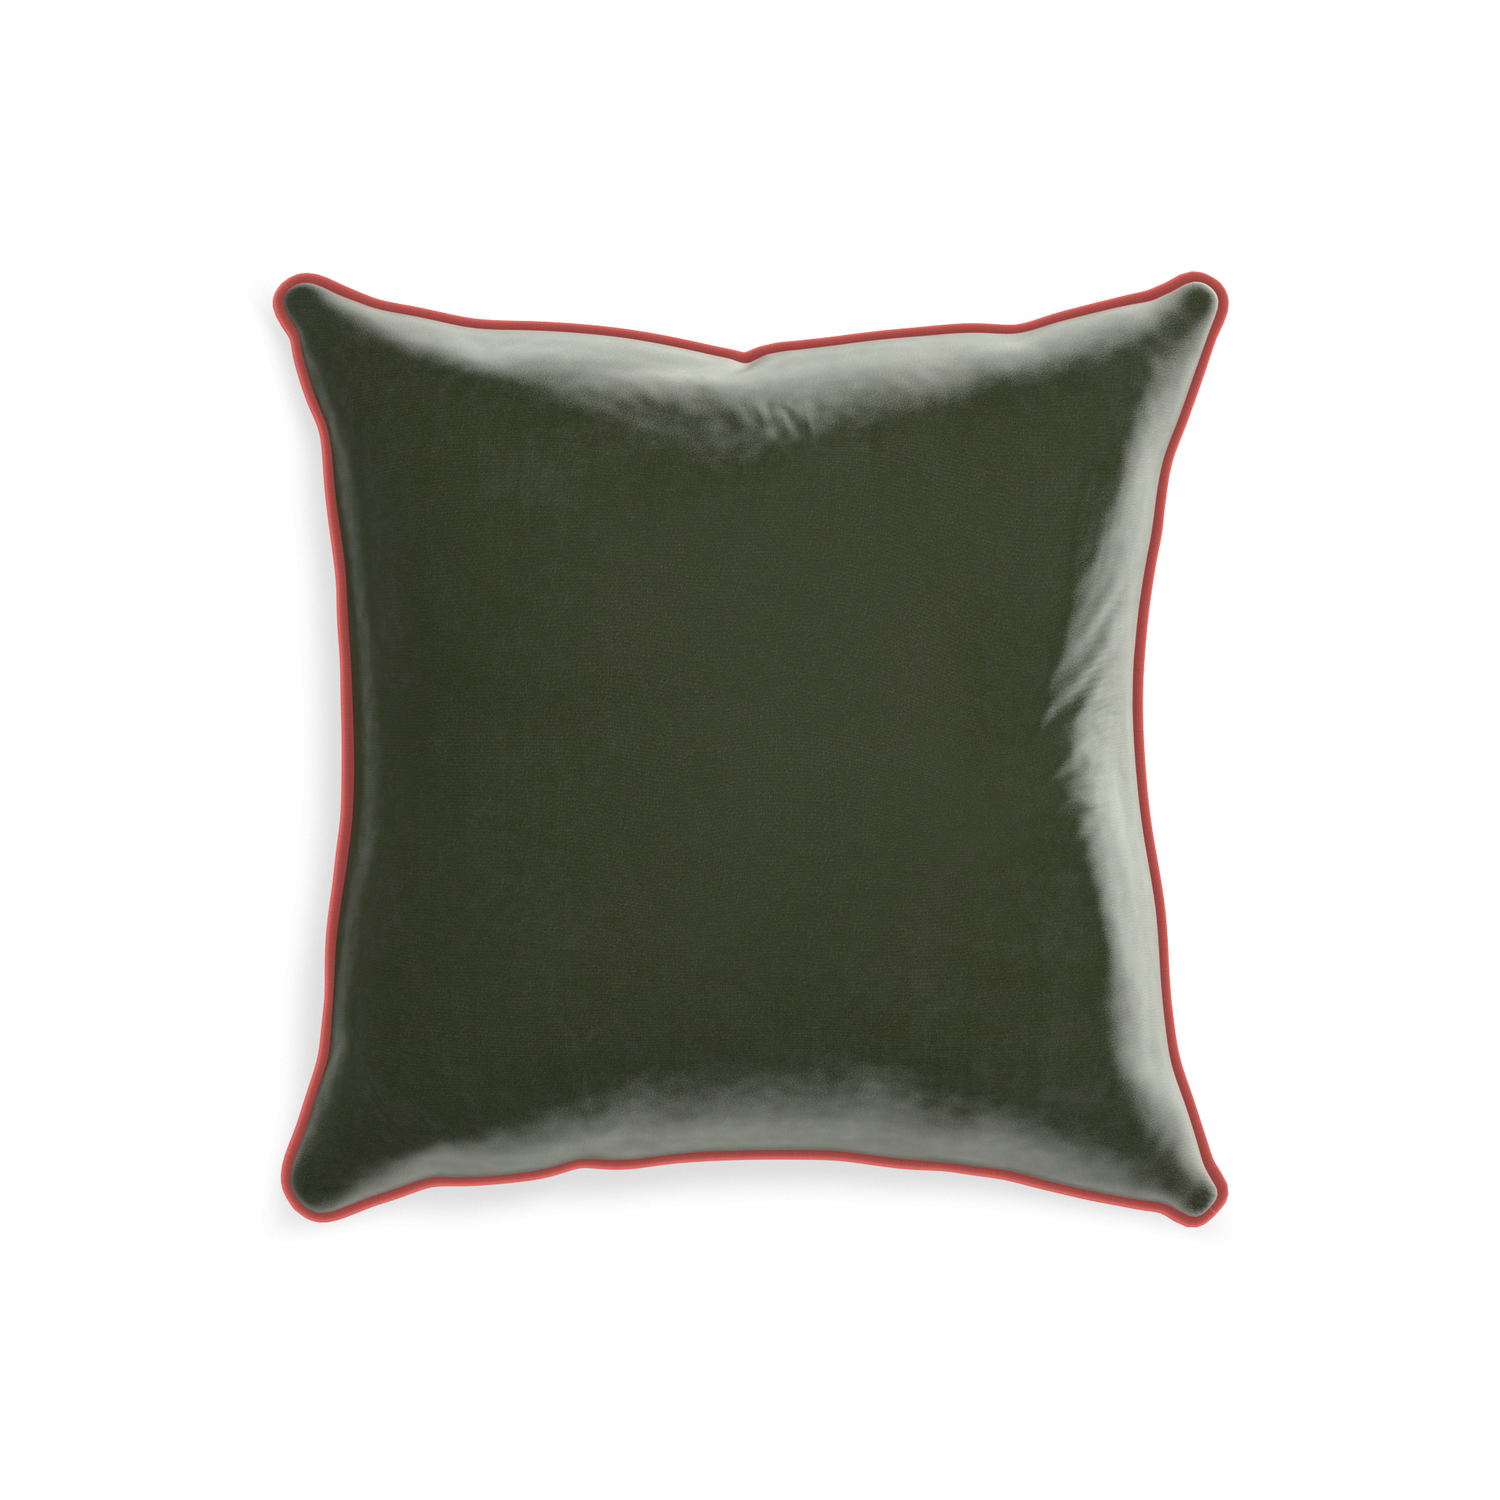 20-square fern velvet custom pillow with c piping on white background